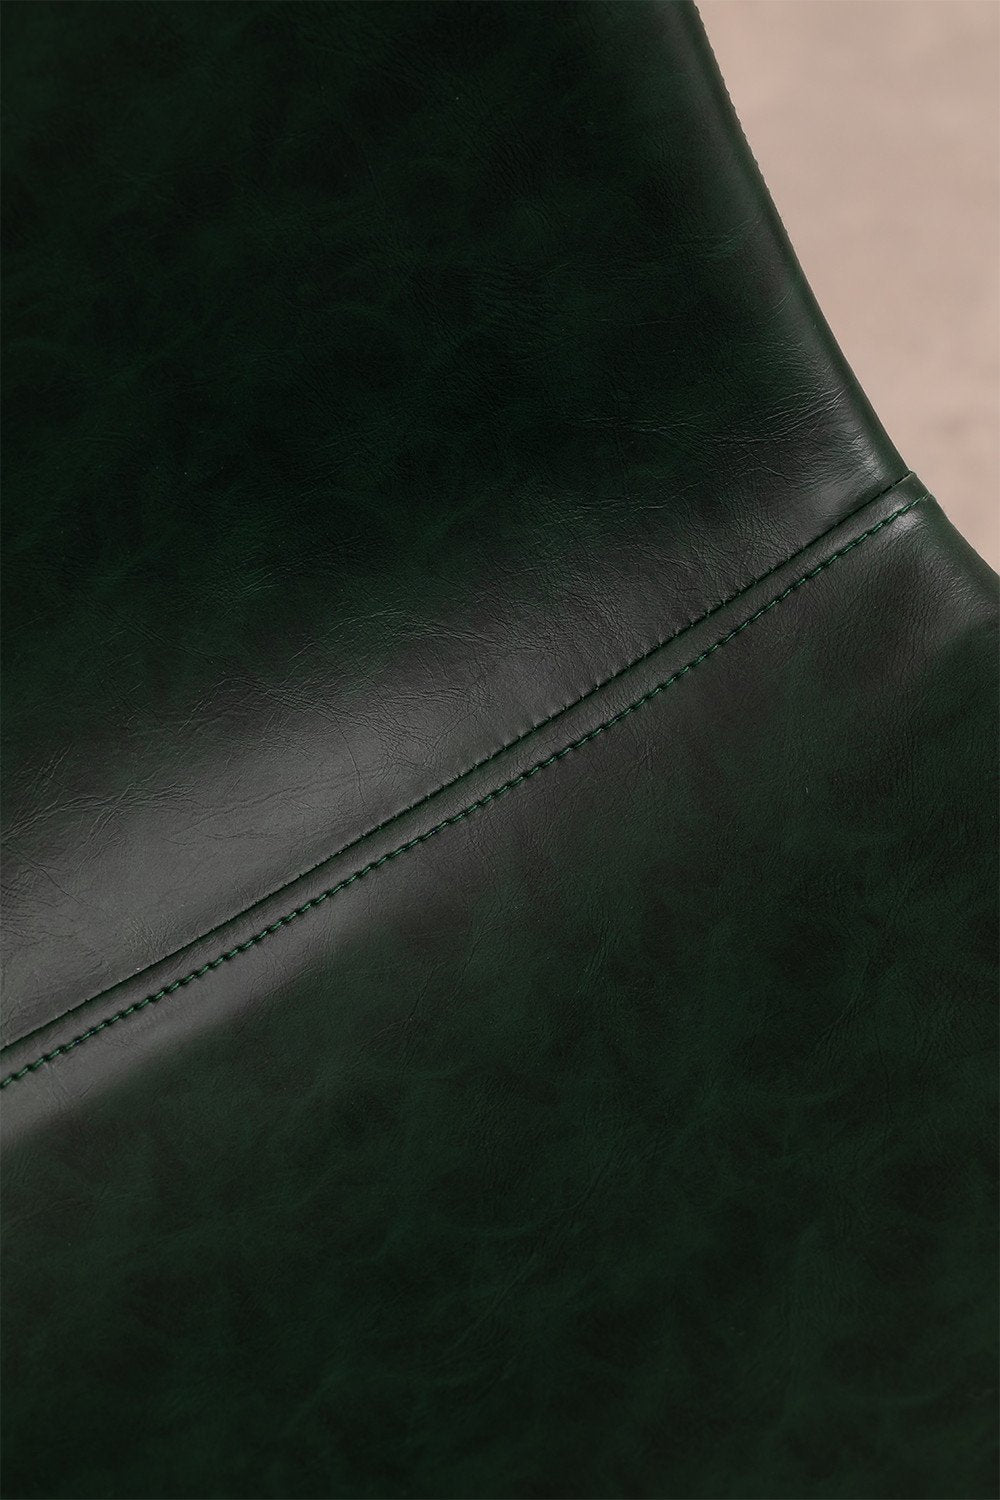 Taburete Alto en Polipiel Glamm ↑75 cm Verde Jungla Negro -  SKLUM